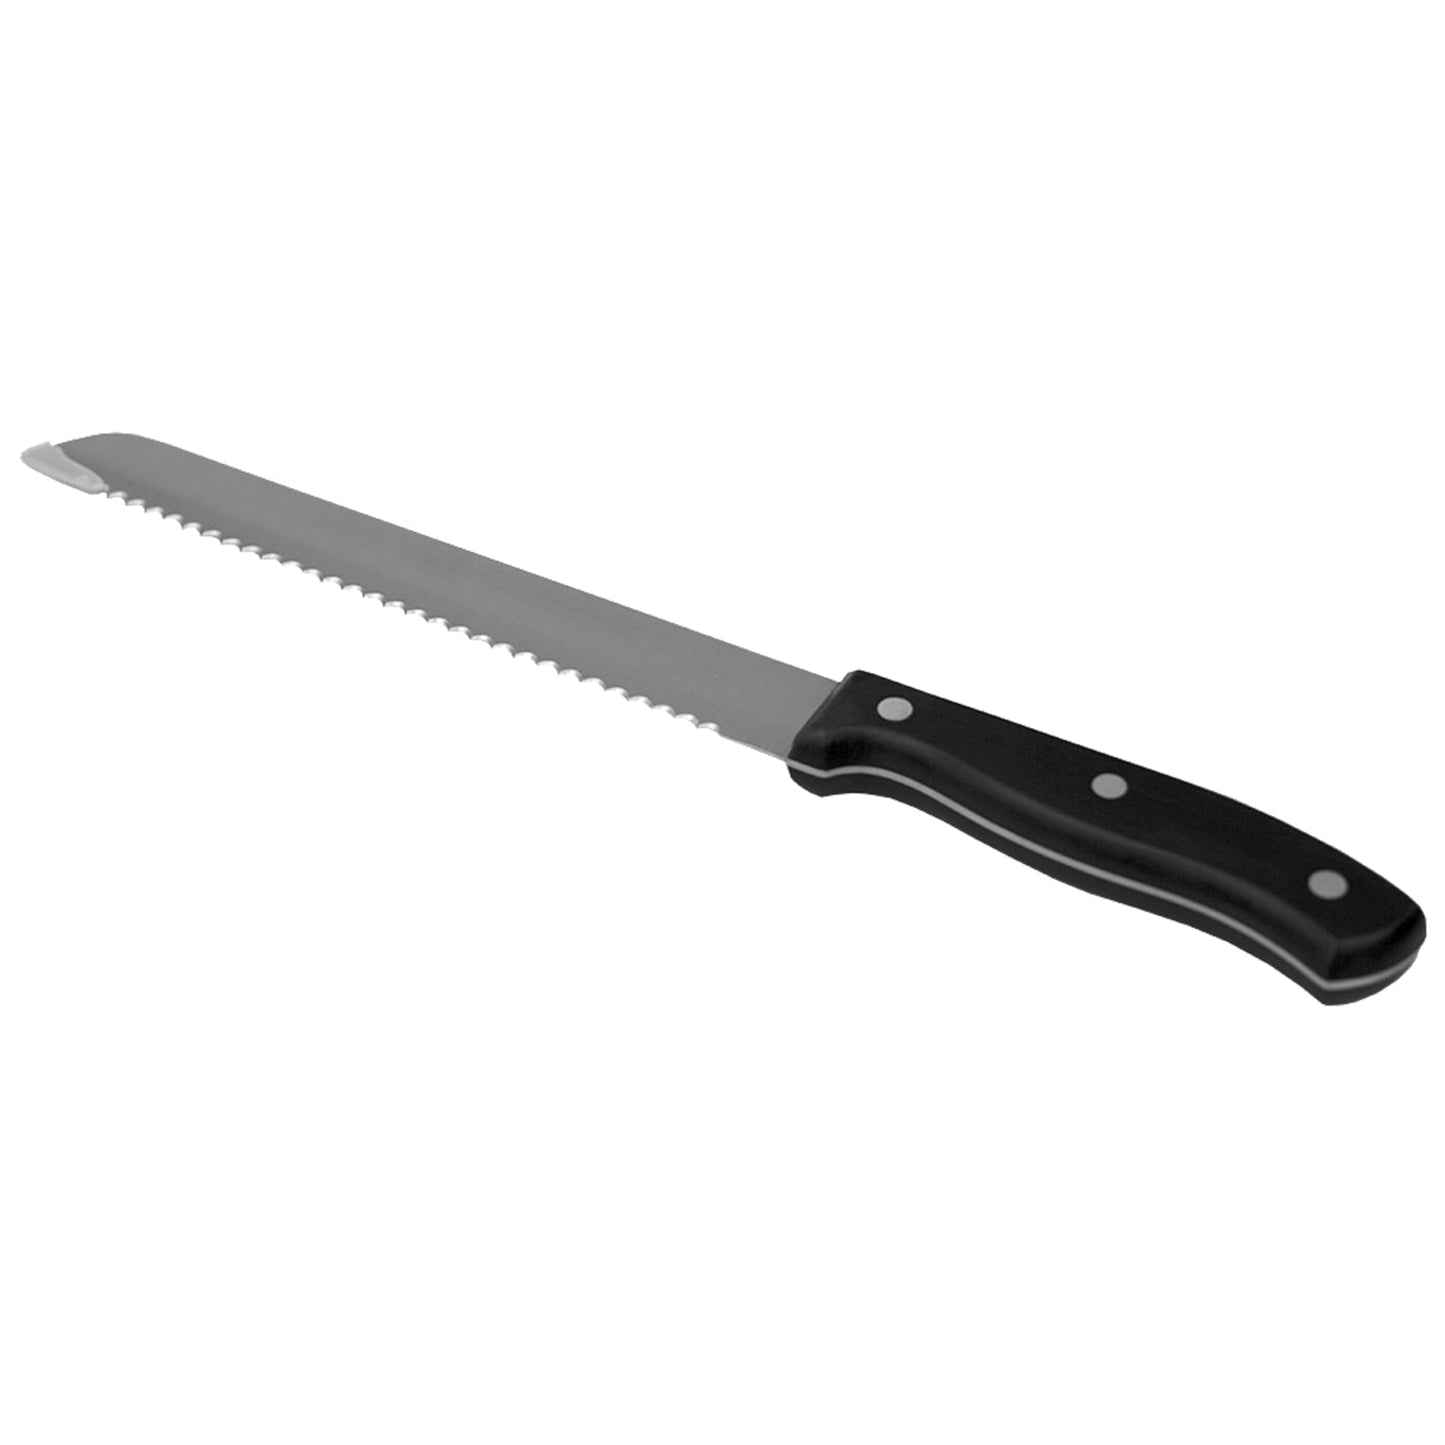 8" Stainless Steel Bread Knife with Contoured Bakelite Handle, Black